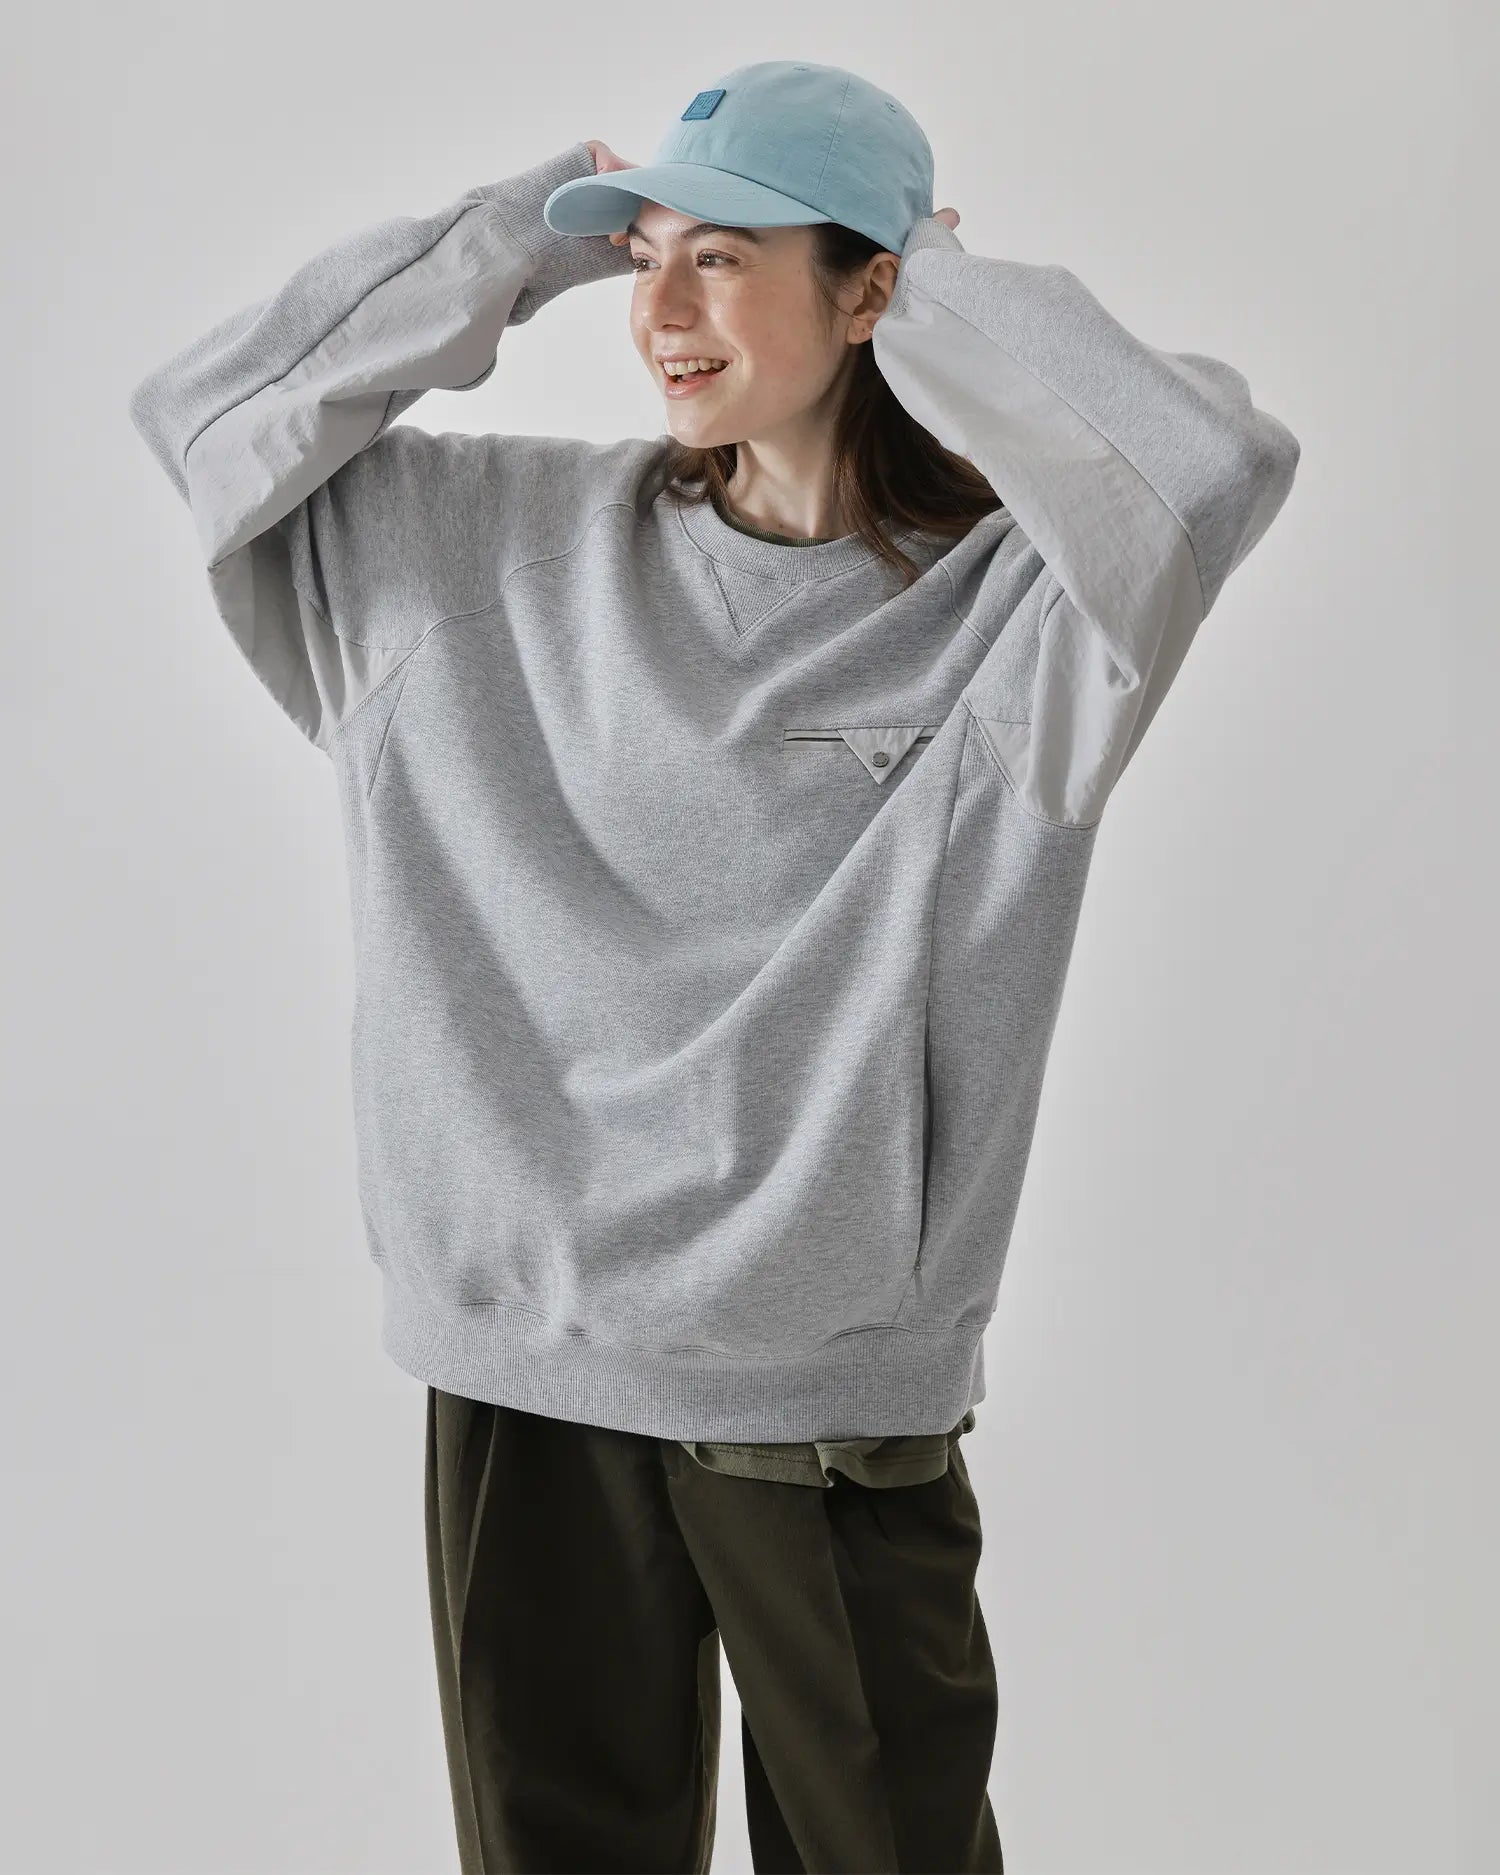 Women's Mixed Fabric Crew Sweatshirt in Gray 05 #gray